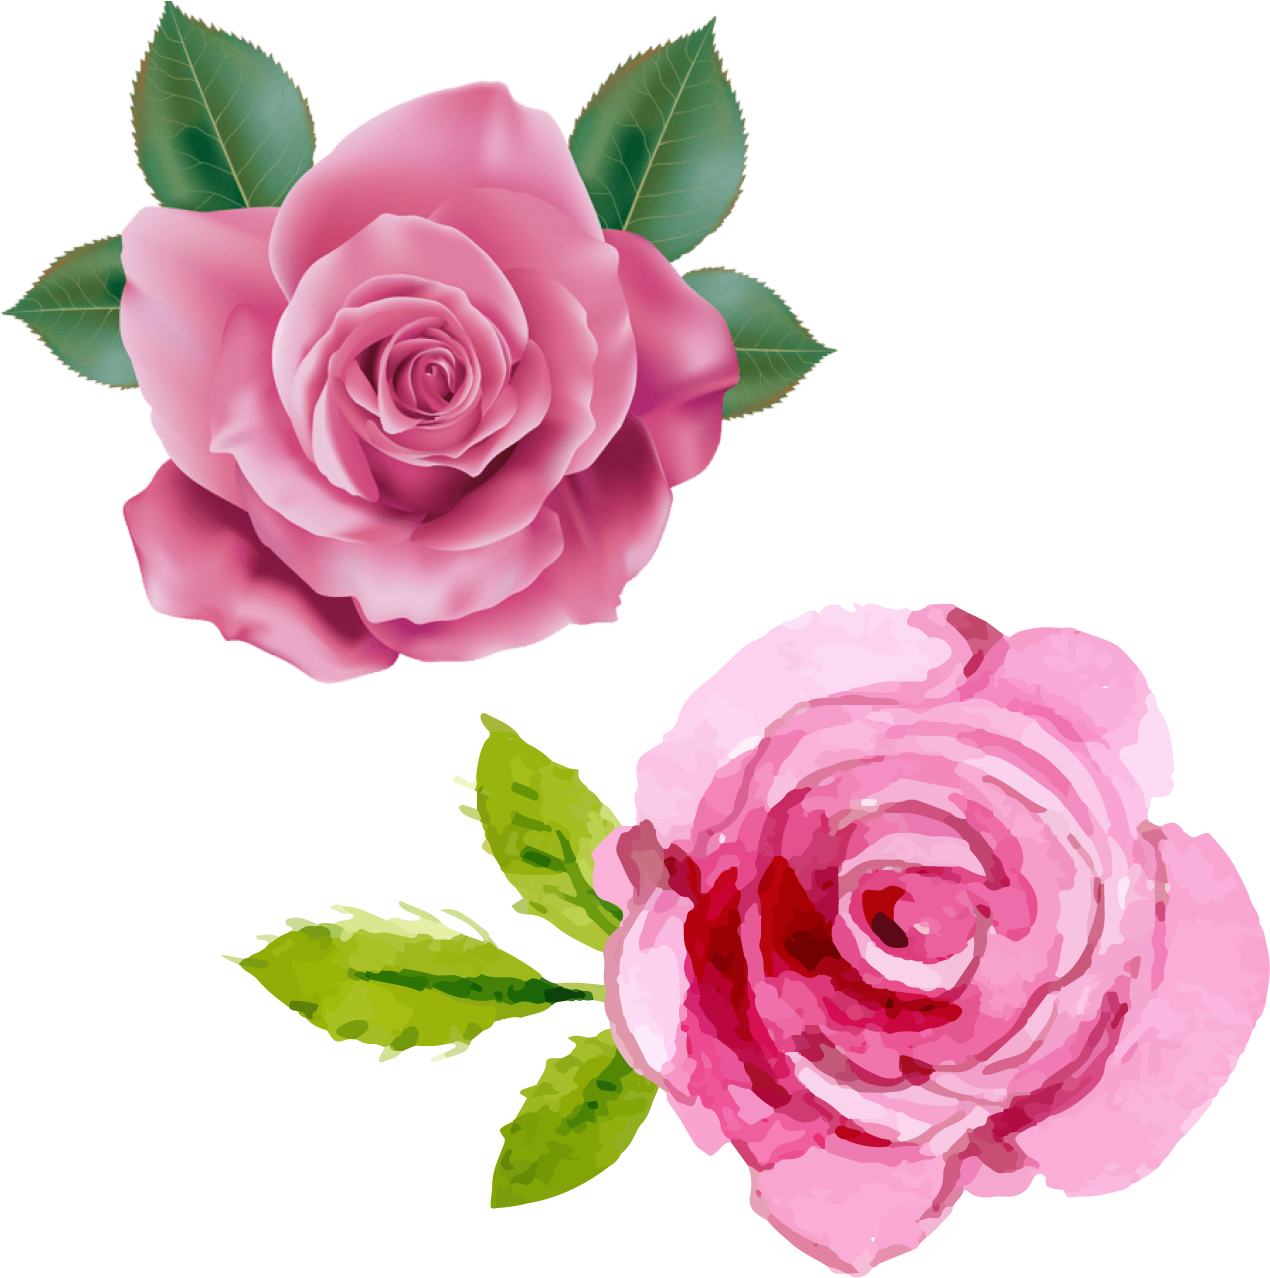 Pink Rose Duo Illustration PNG